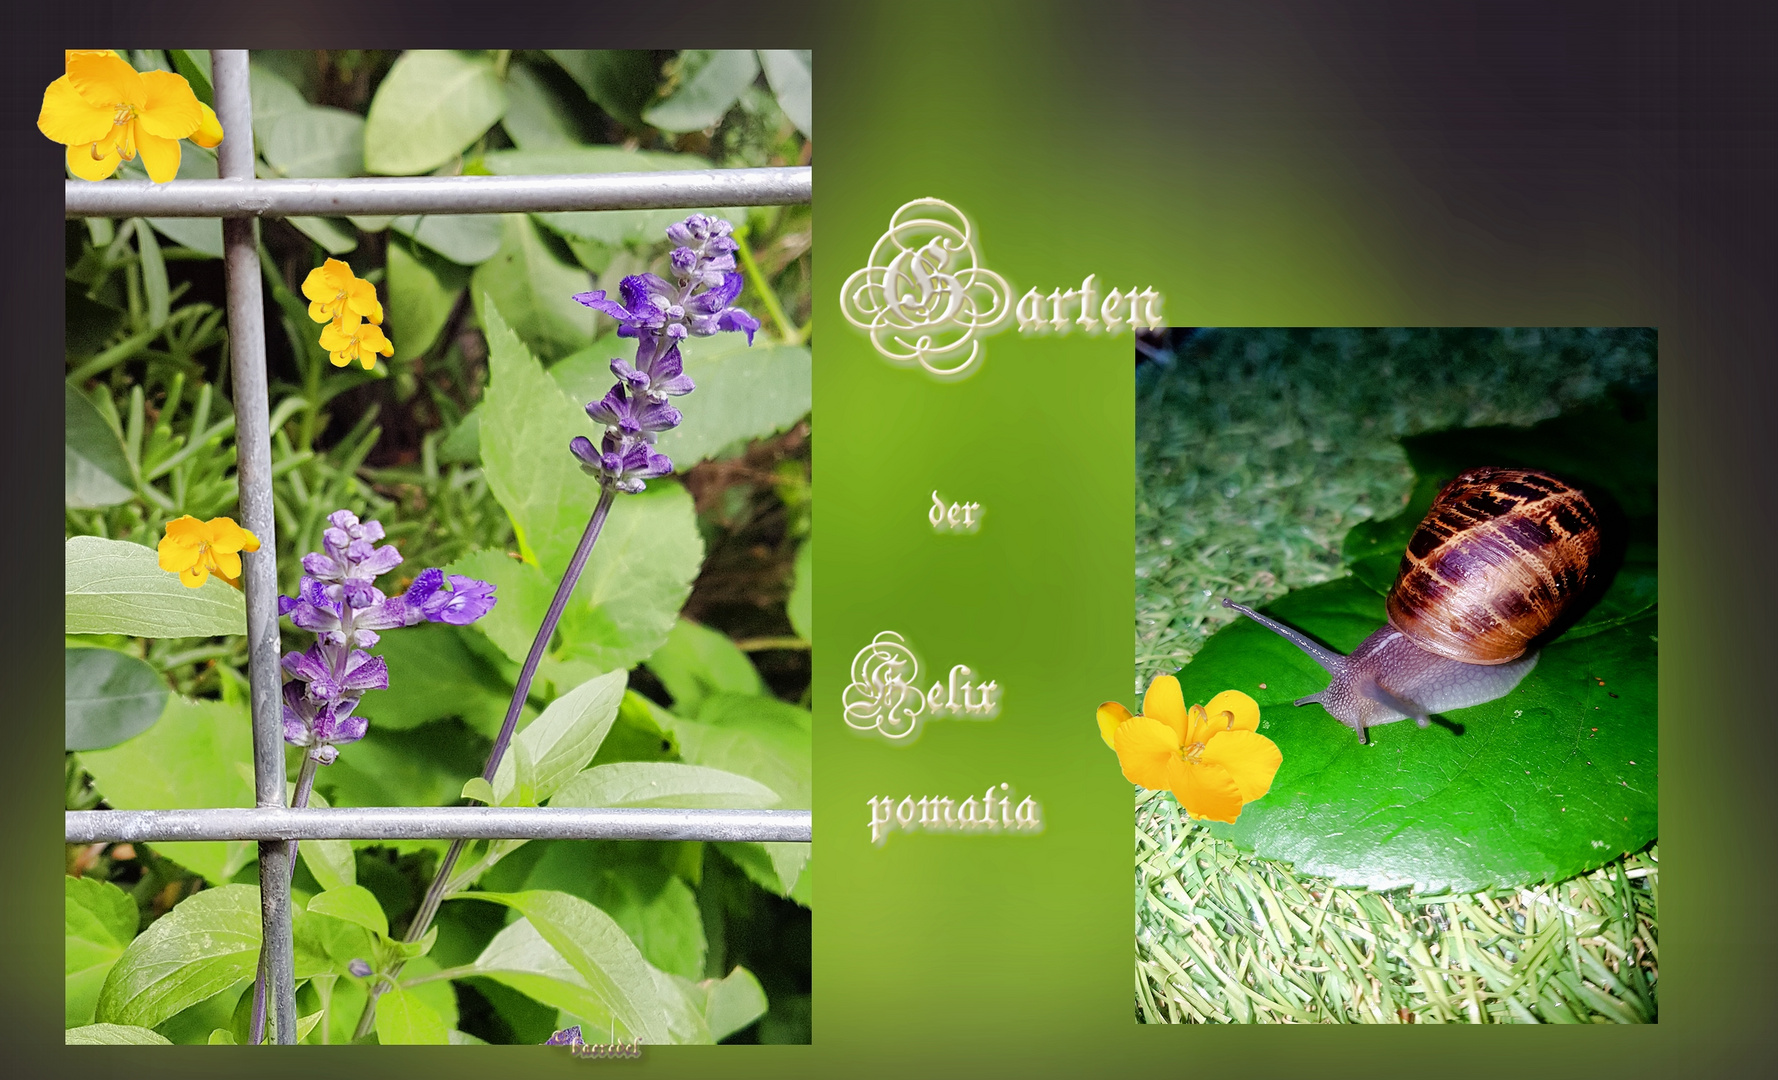 Garten der Helix pomatia